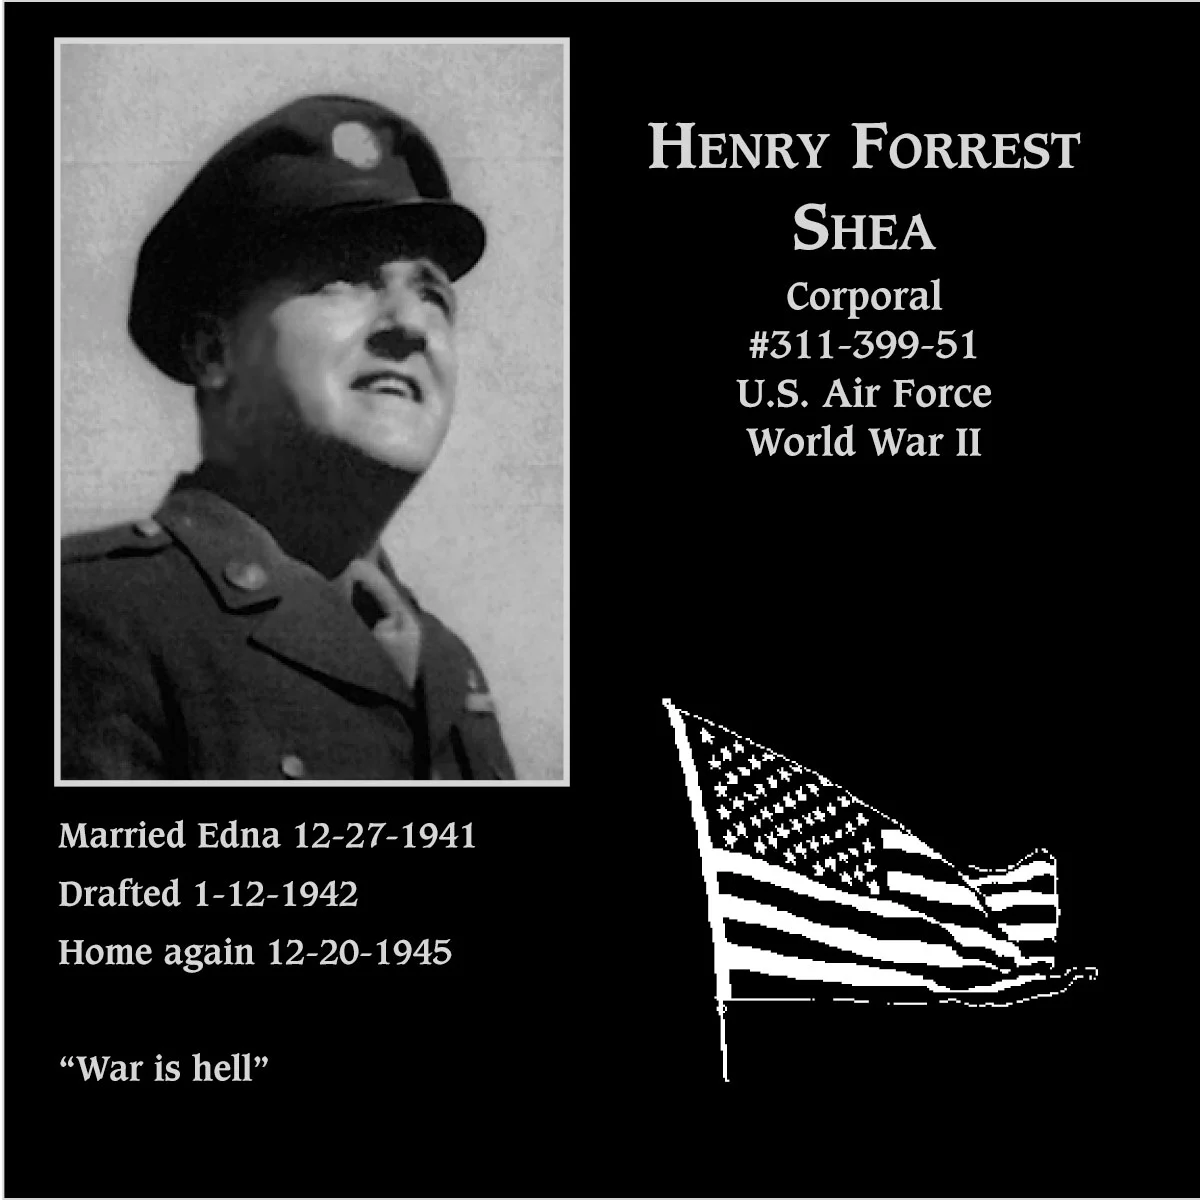 Henry Forrest Shea